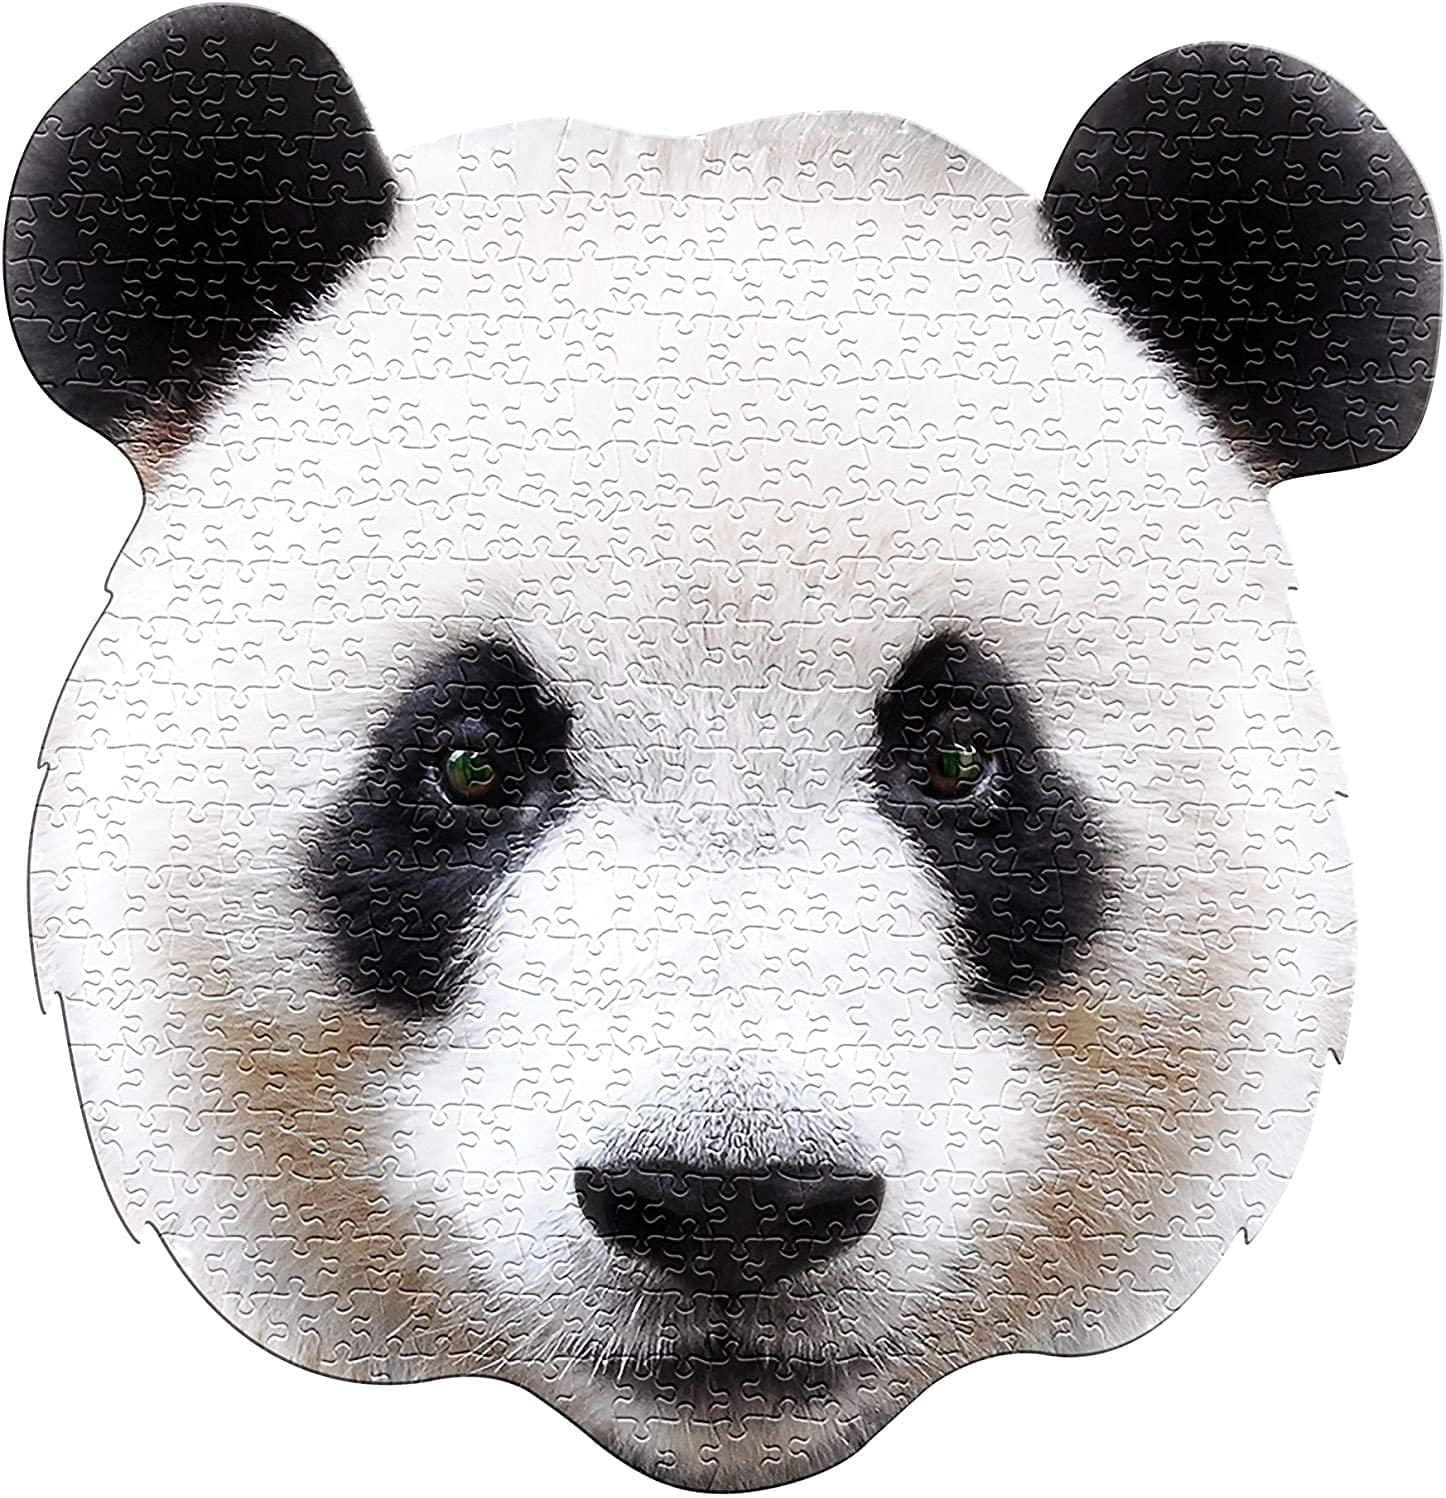 I AM Panda 300 Piece Animal Head-Shaped Jigsaw Puzzle